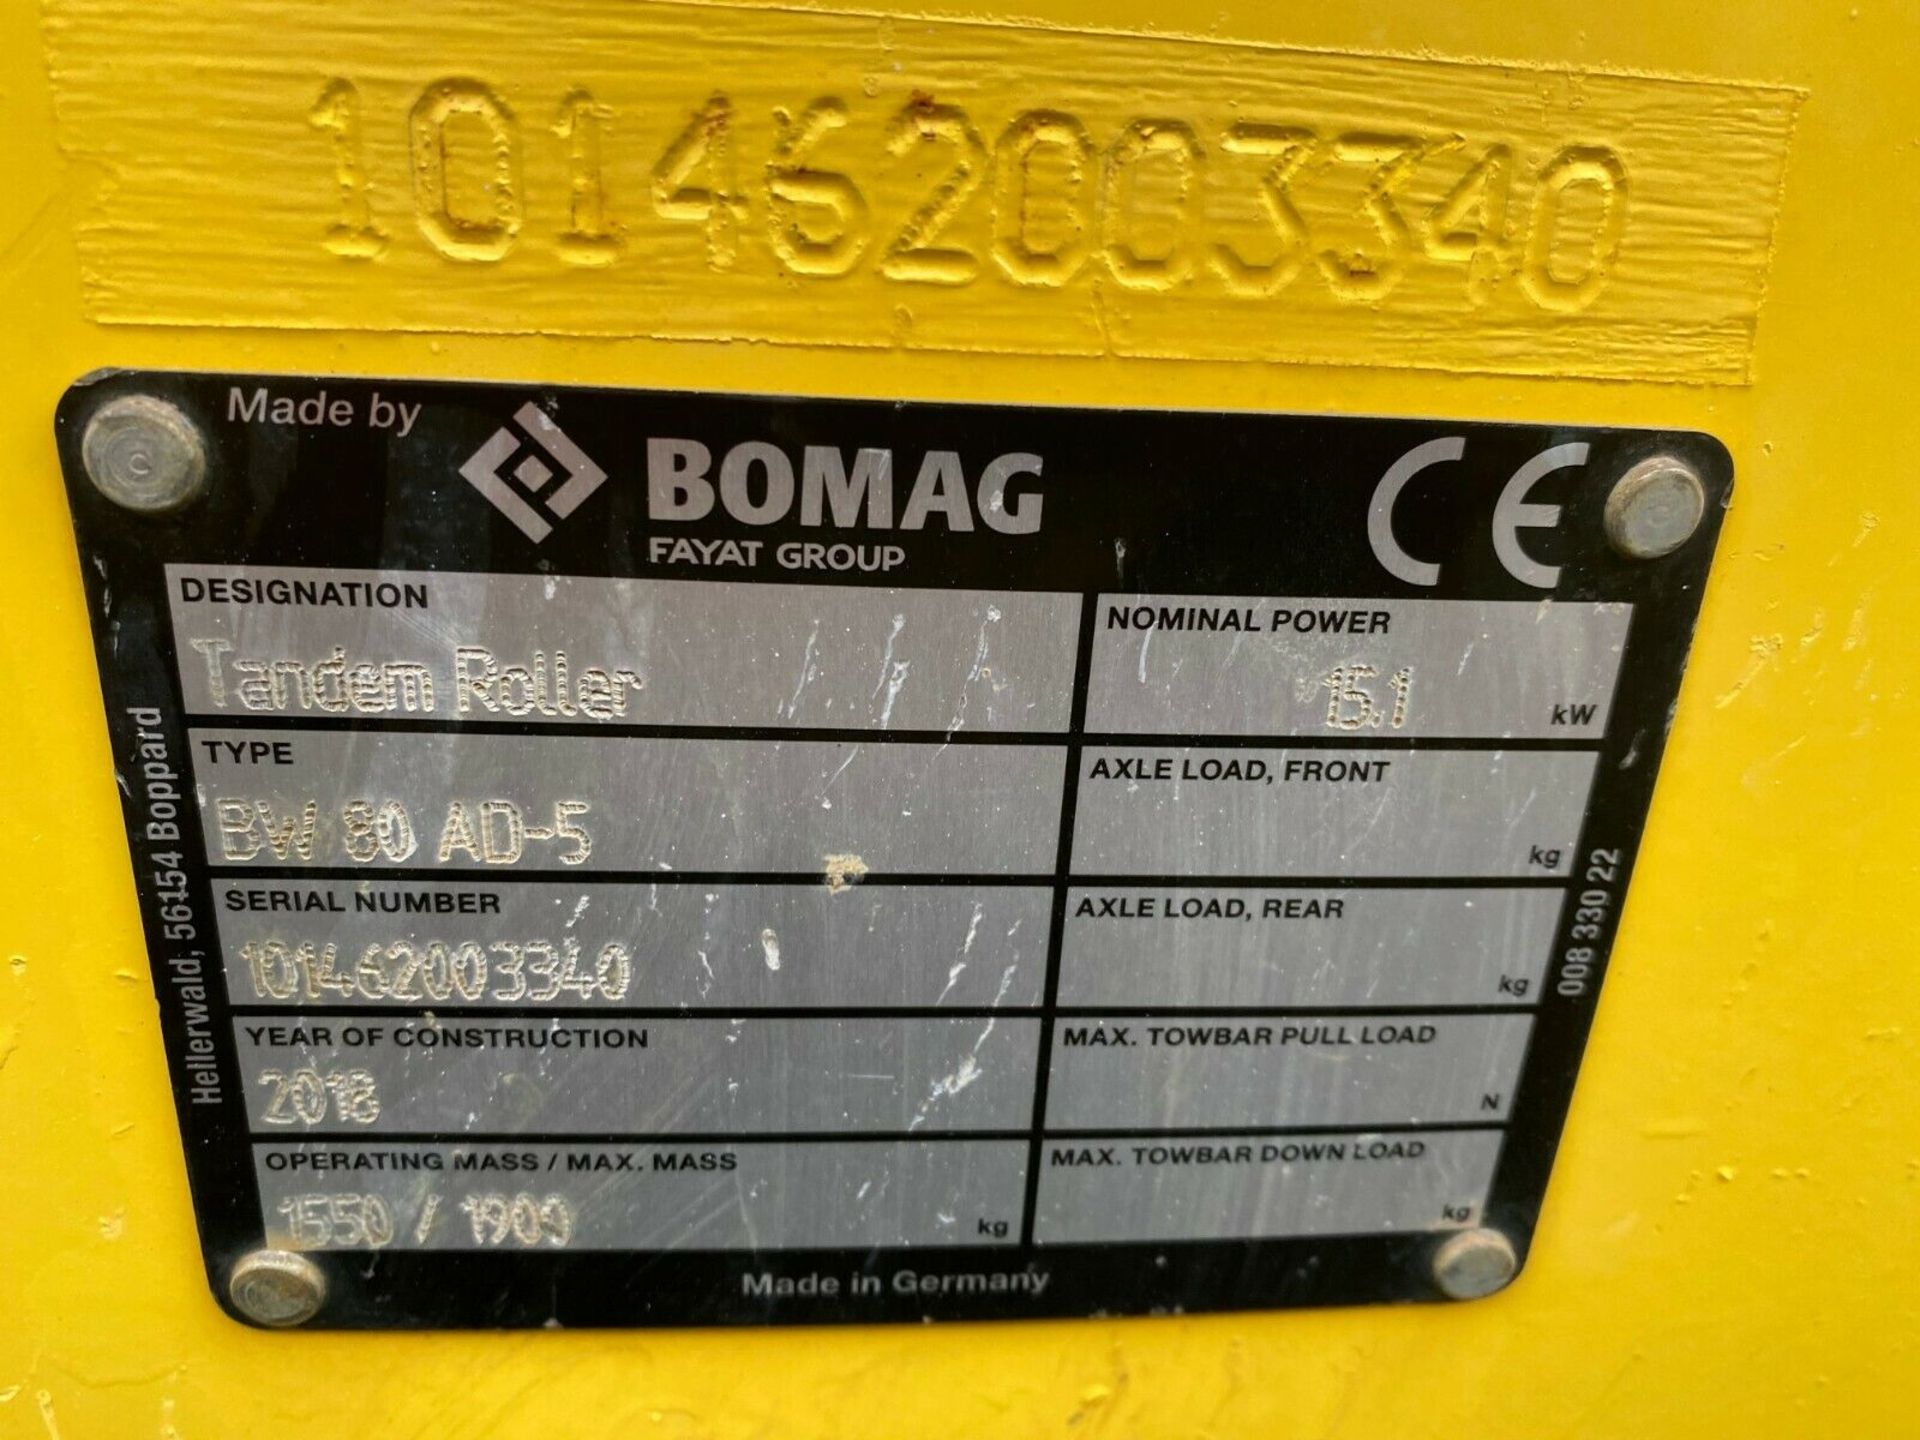 Bomag BW80 AD-5 Tandem Roller - Image 10 of 10